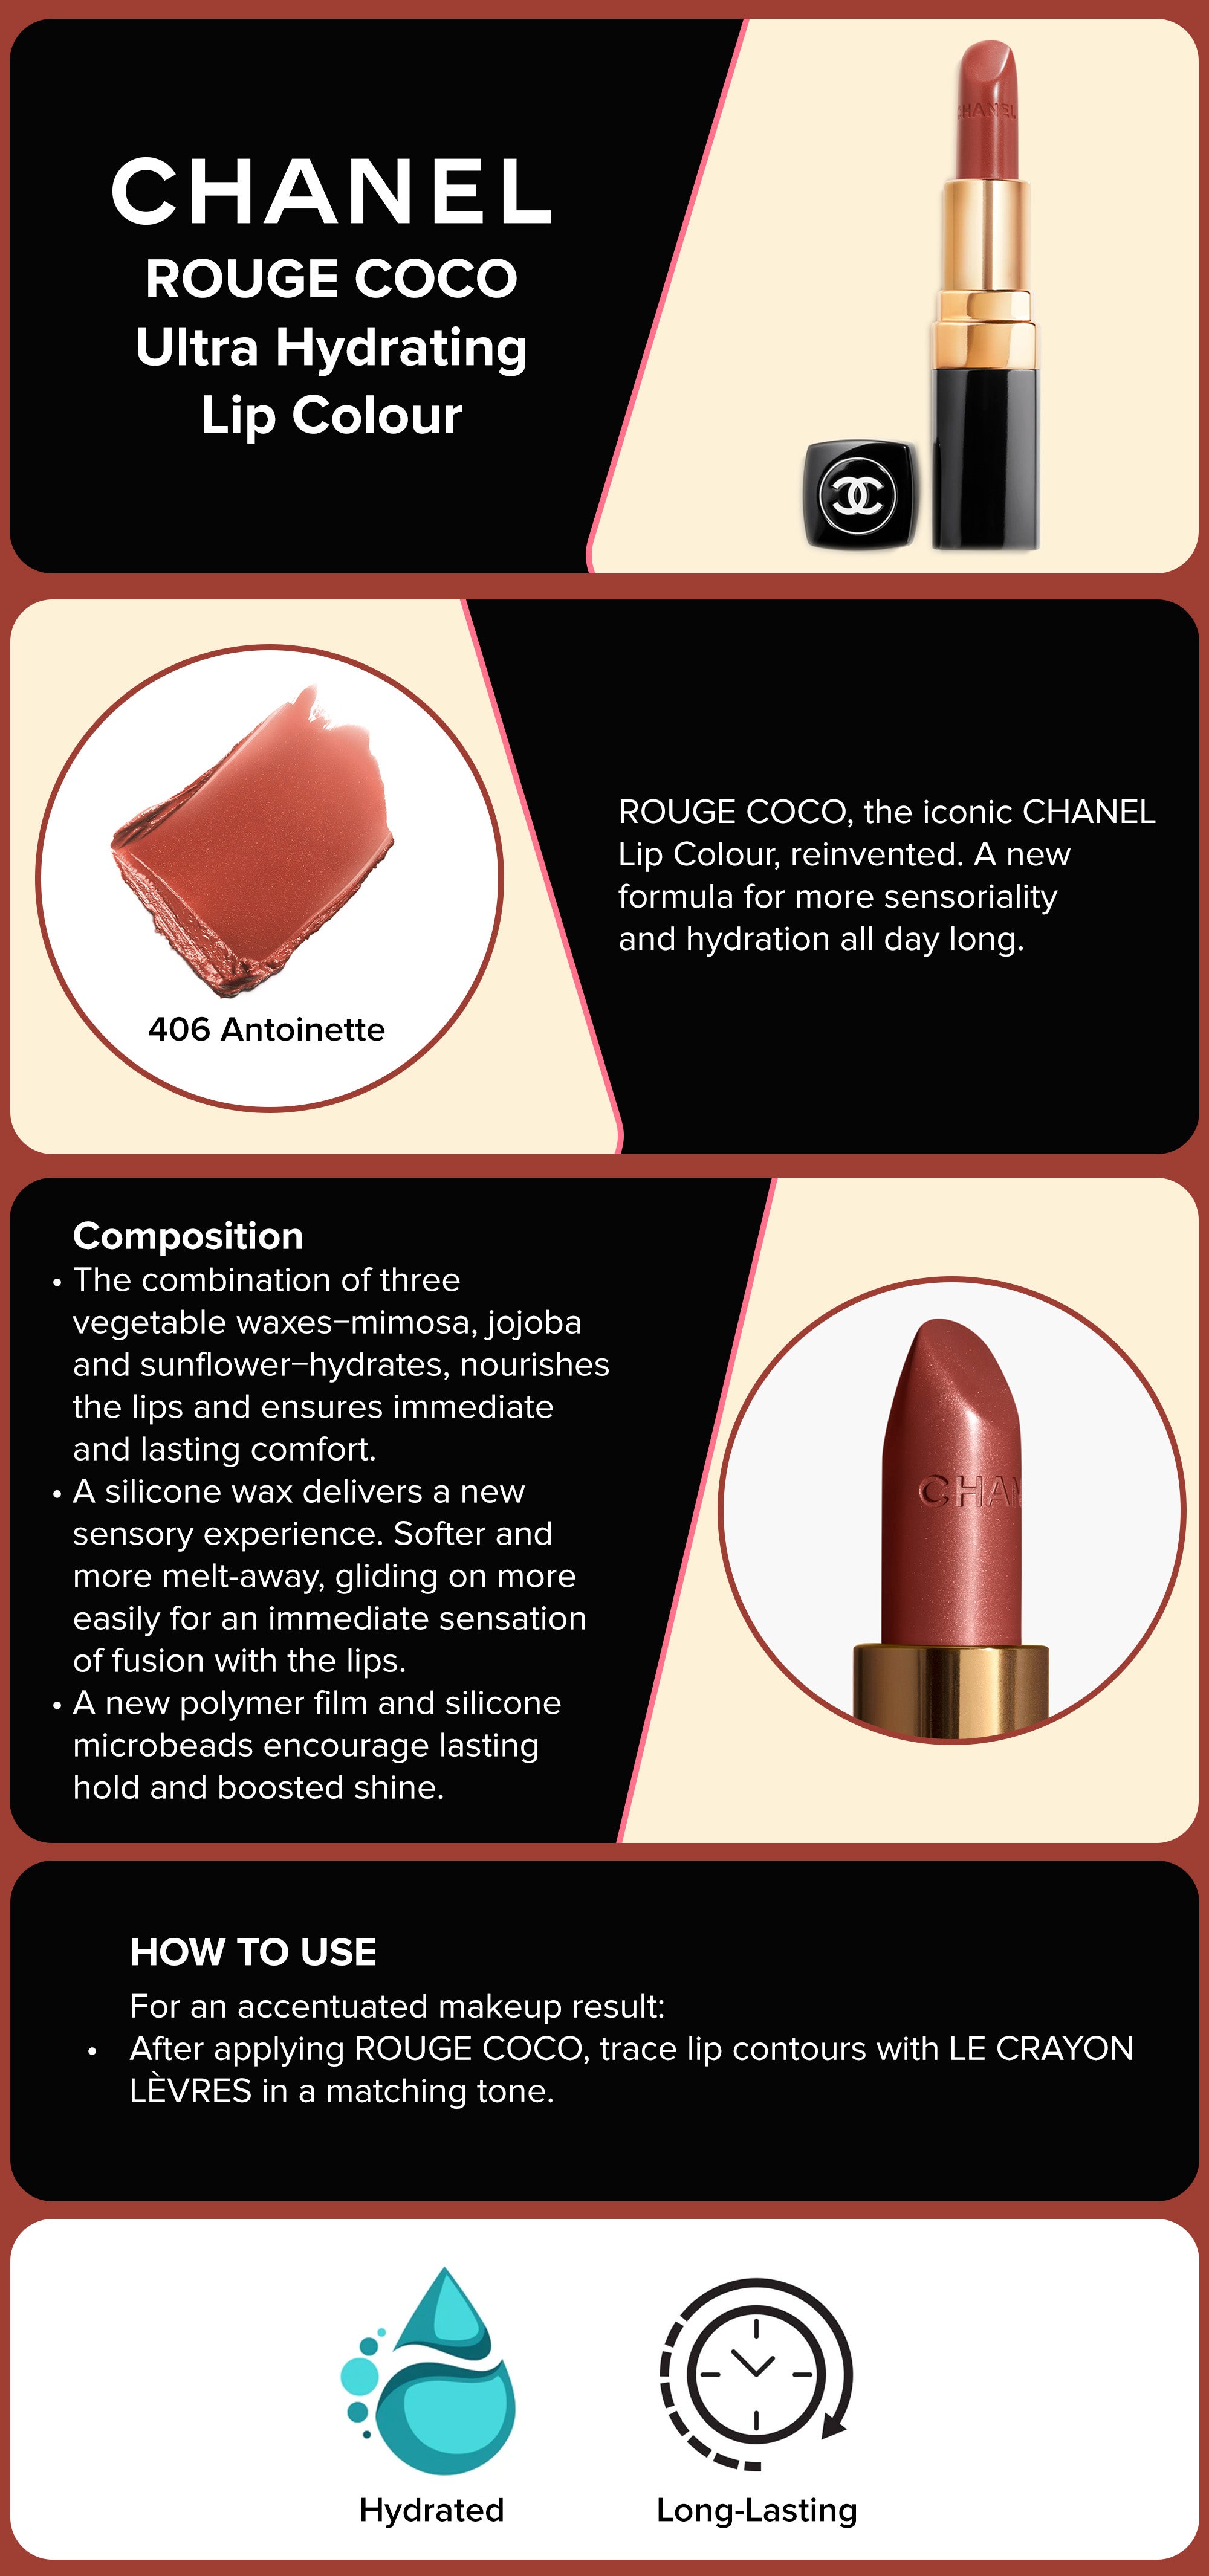 Chanel, ROUGE COCO Ultra Hydrating Lip Colour, Lipstick